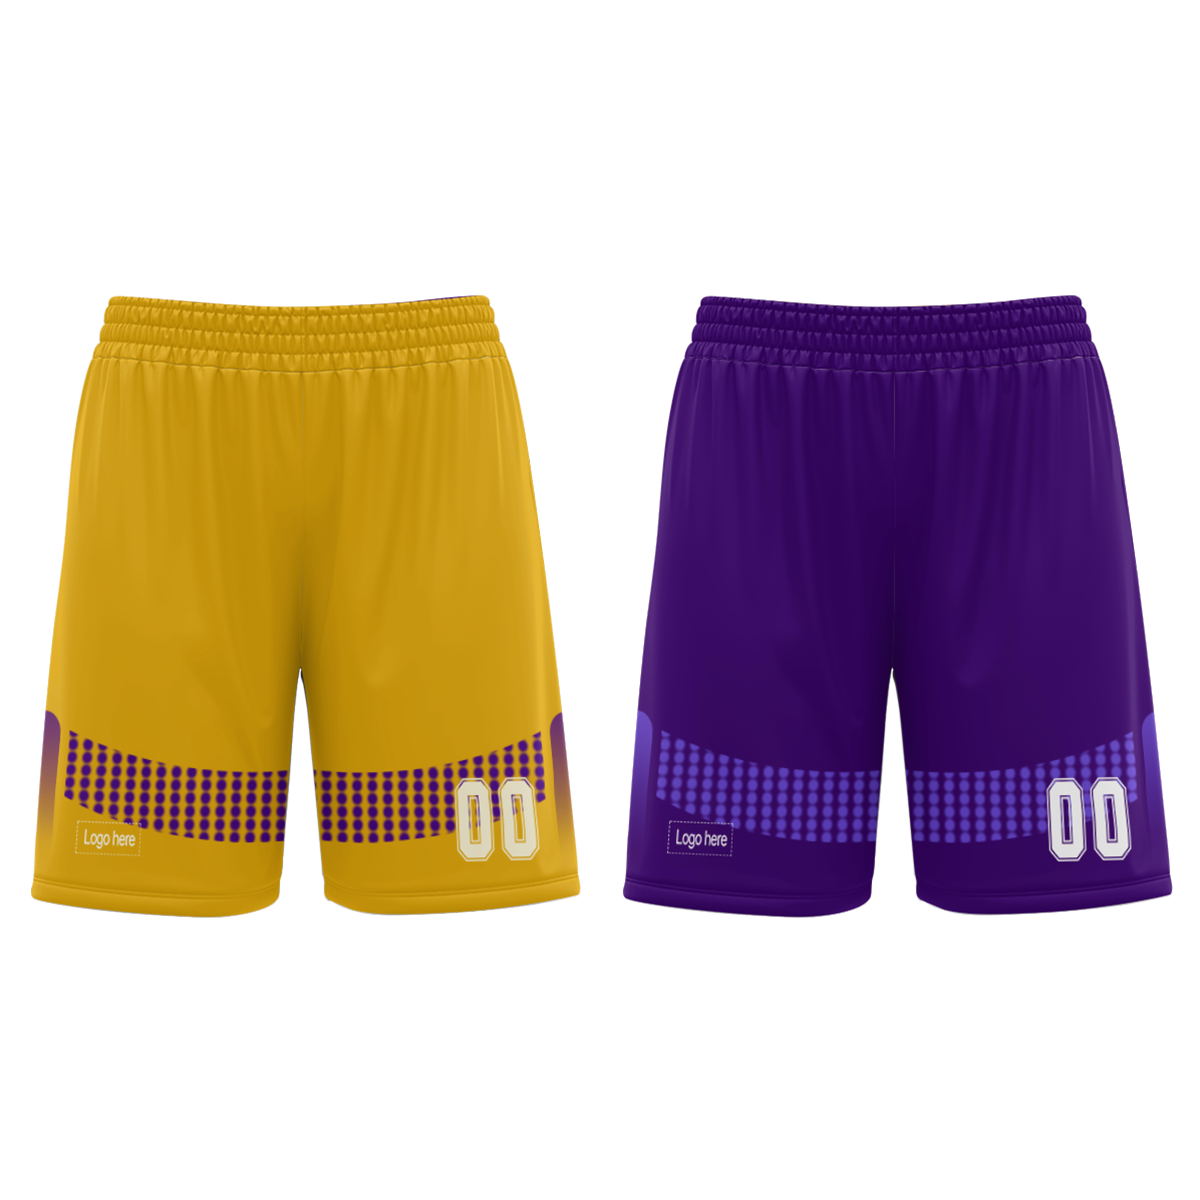 oem-service-custom-cool-design-new-style-basketball-jerseys-quick-dry-basketball-uniforms-at-cj-pod-7